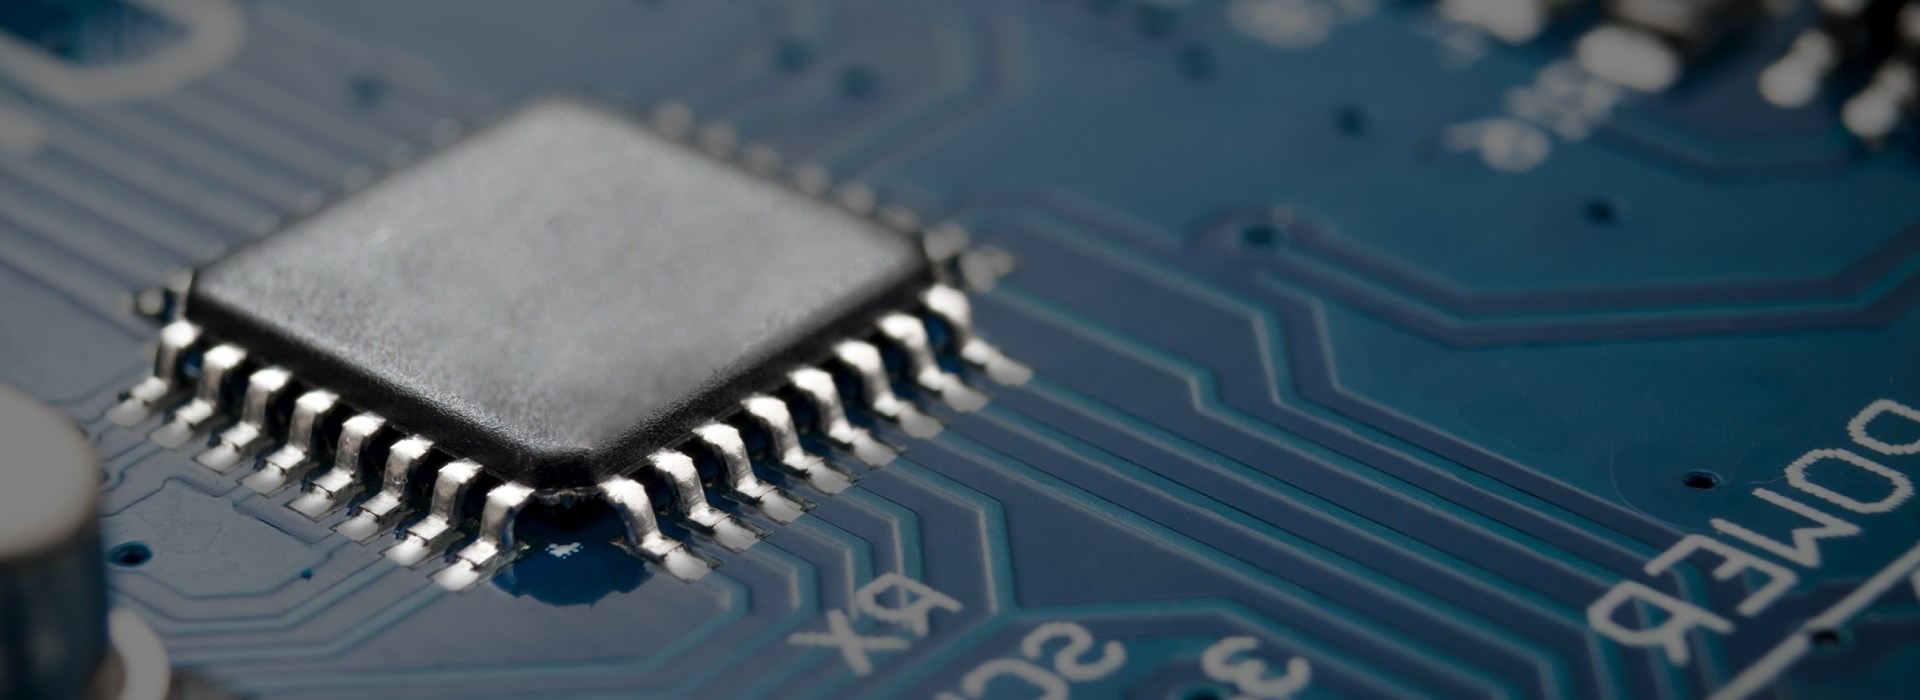 32-bit microprocessor smart valve